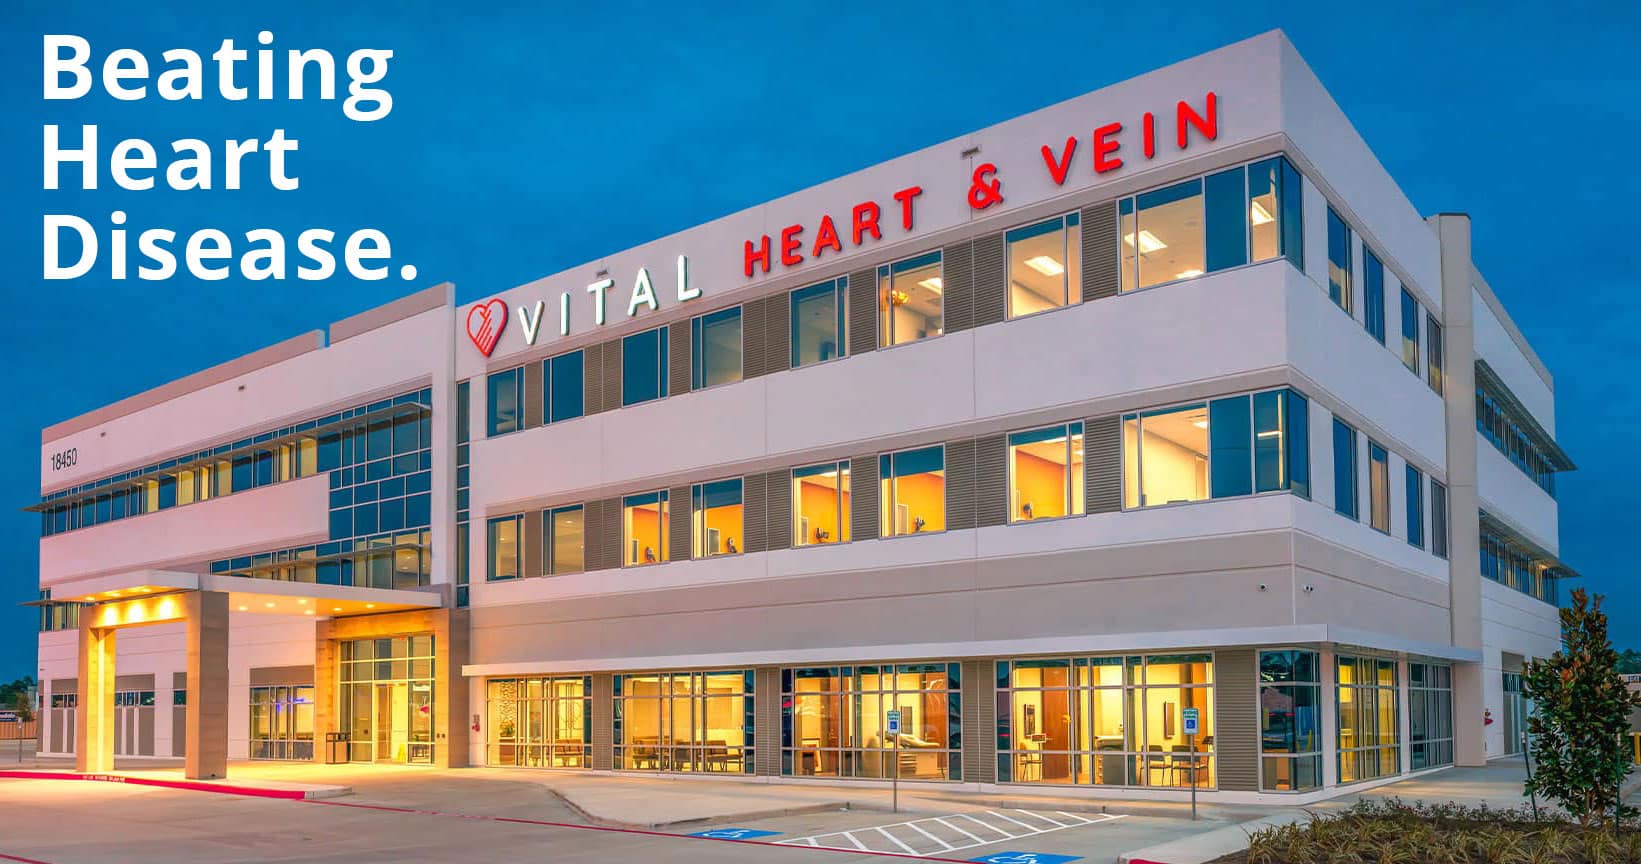 Vital Heart & Vein - Houston Cardiologist Beating Heart Disease